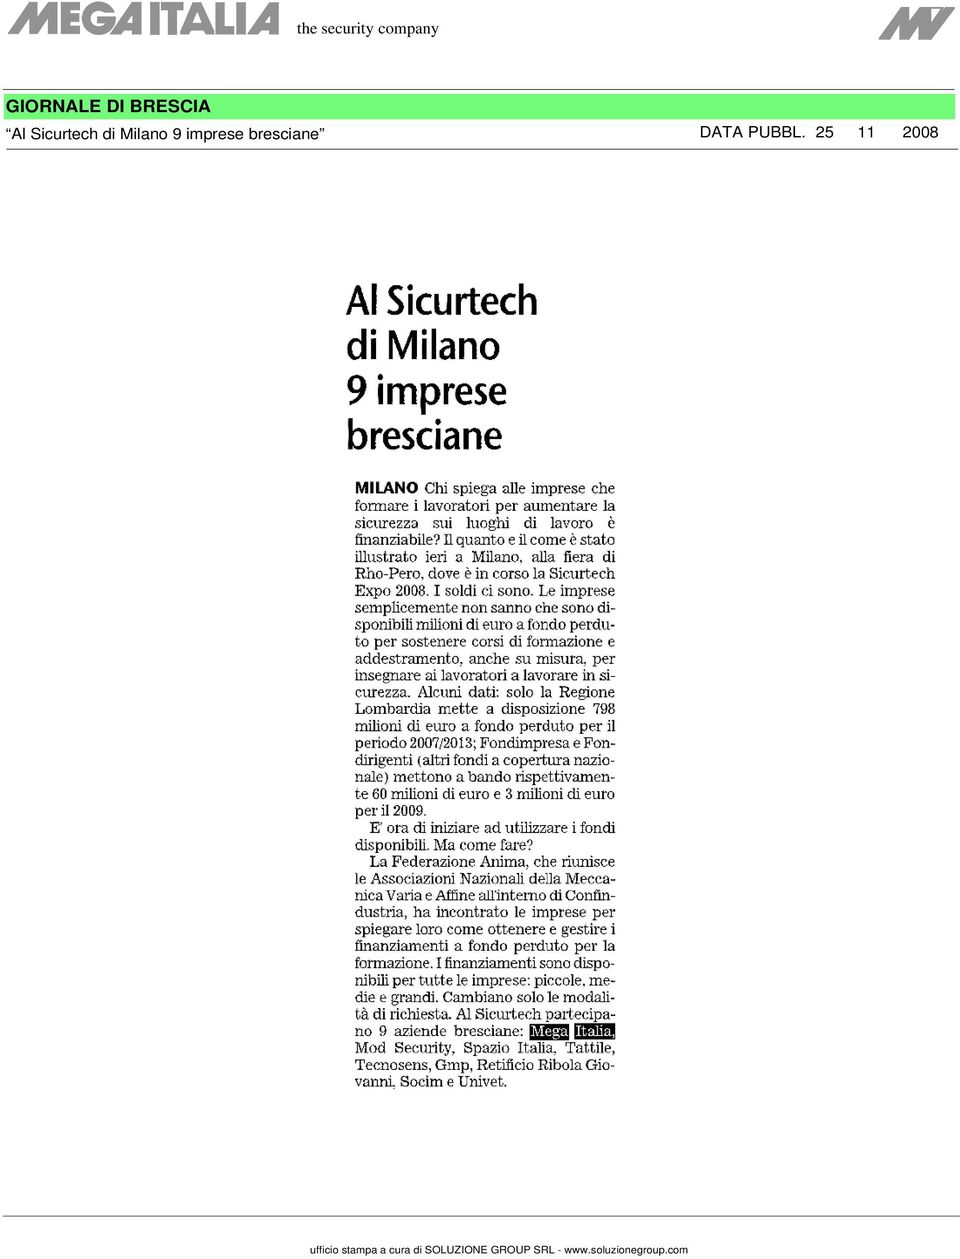 Milano 9 imprese